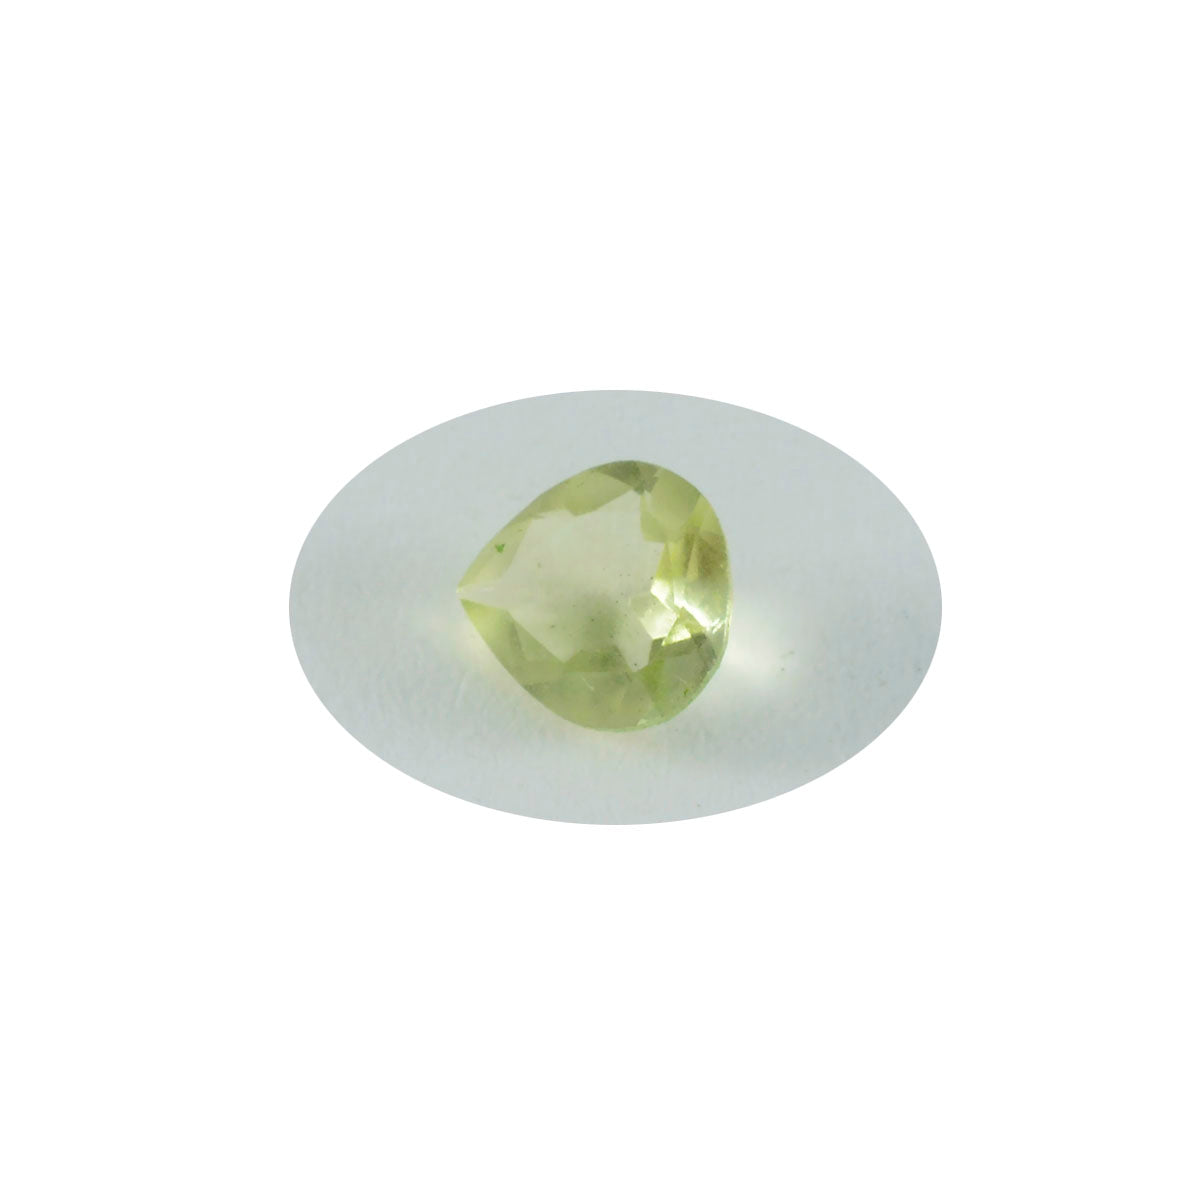 riyogems 1pc イエロー レモン クォーツ ファセット 15x15 mm ハート形の甘い品質の宝石